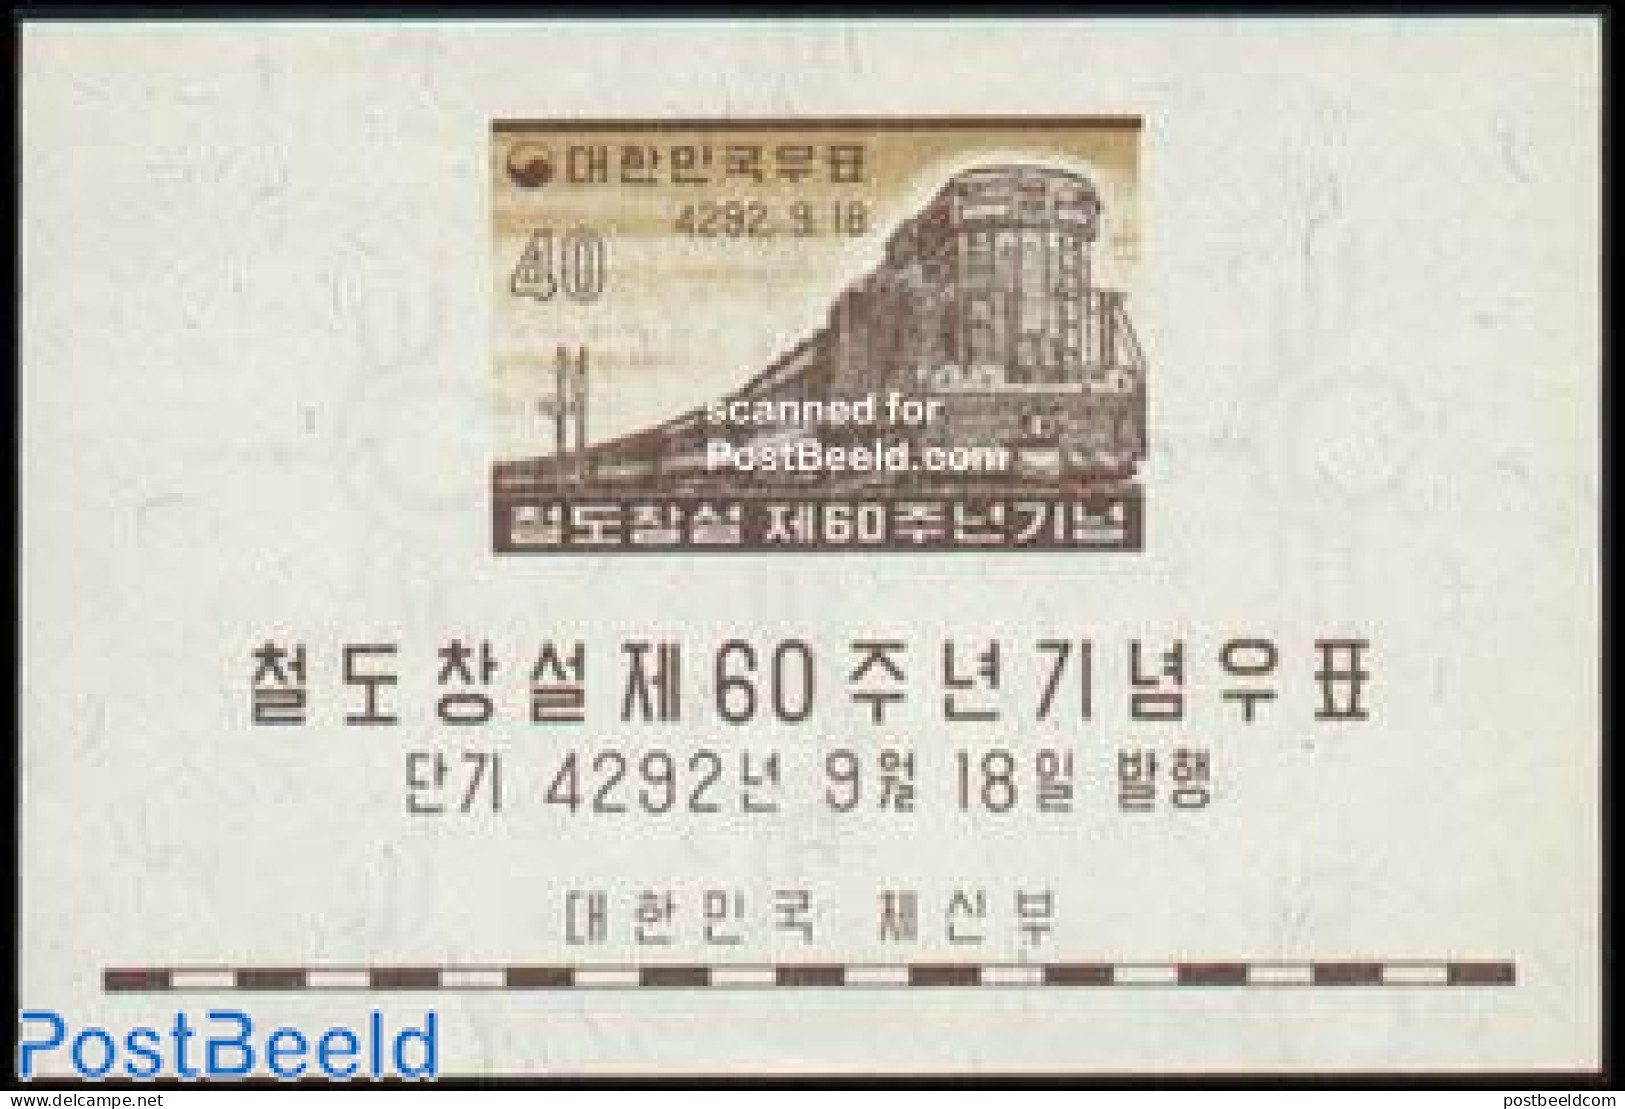 Korea, South 1959 Railways S/s, Mint NH, Transport - Railways - Treinen